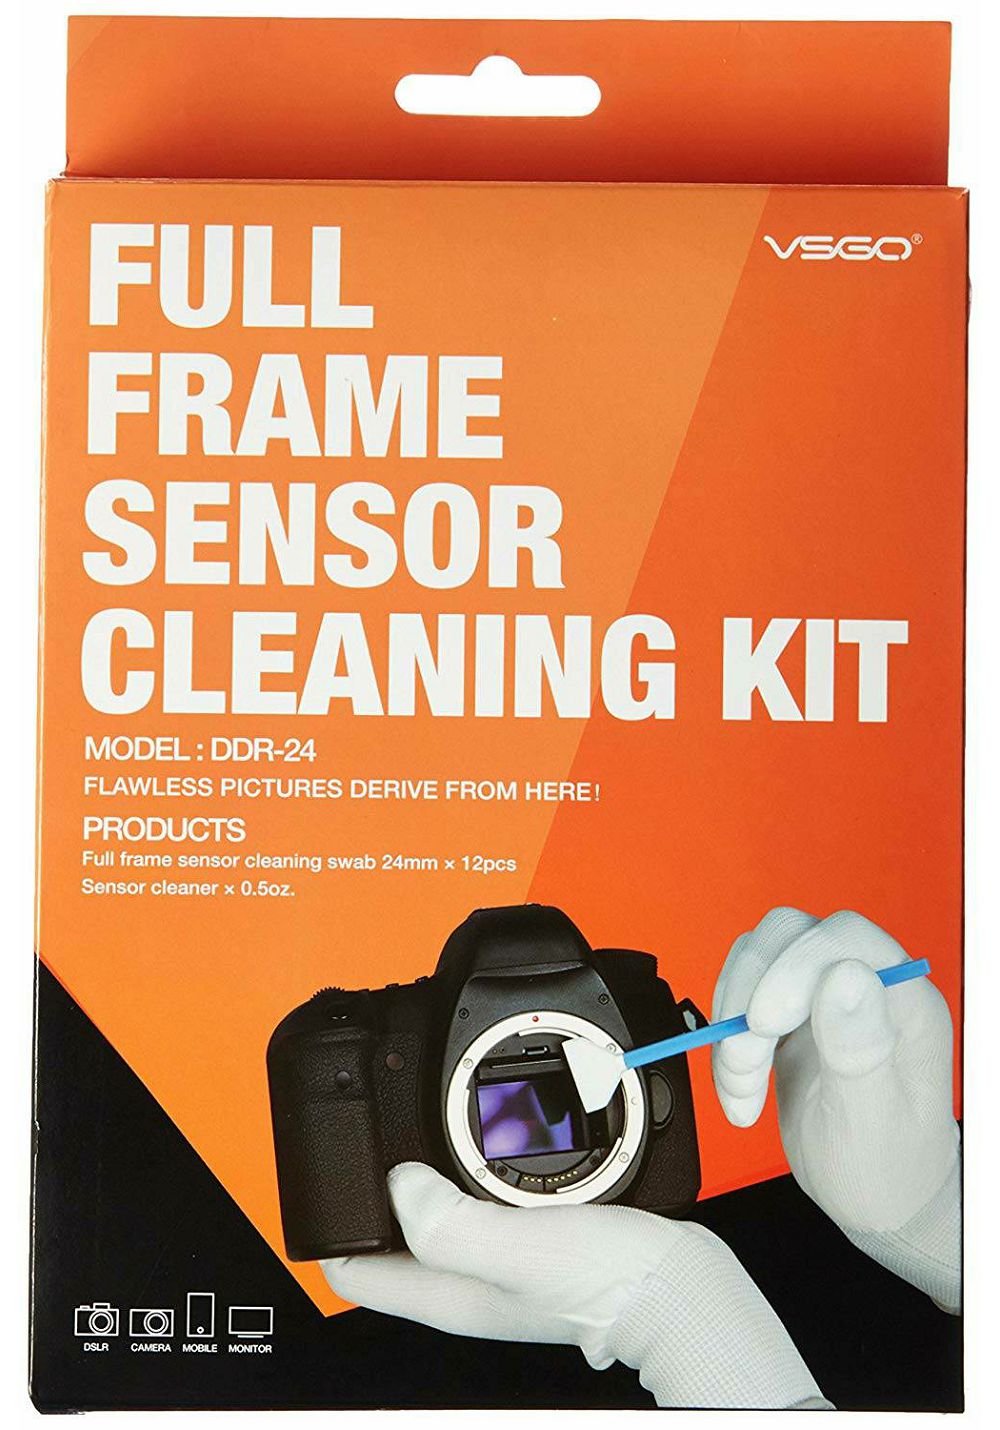 VSGO DDR-24 Full-frame Sensor Cleaning Rod KIT komplet za čišćenje senzora 12x swab štapići + 15ml tekućina